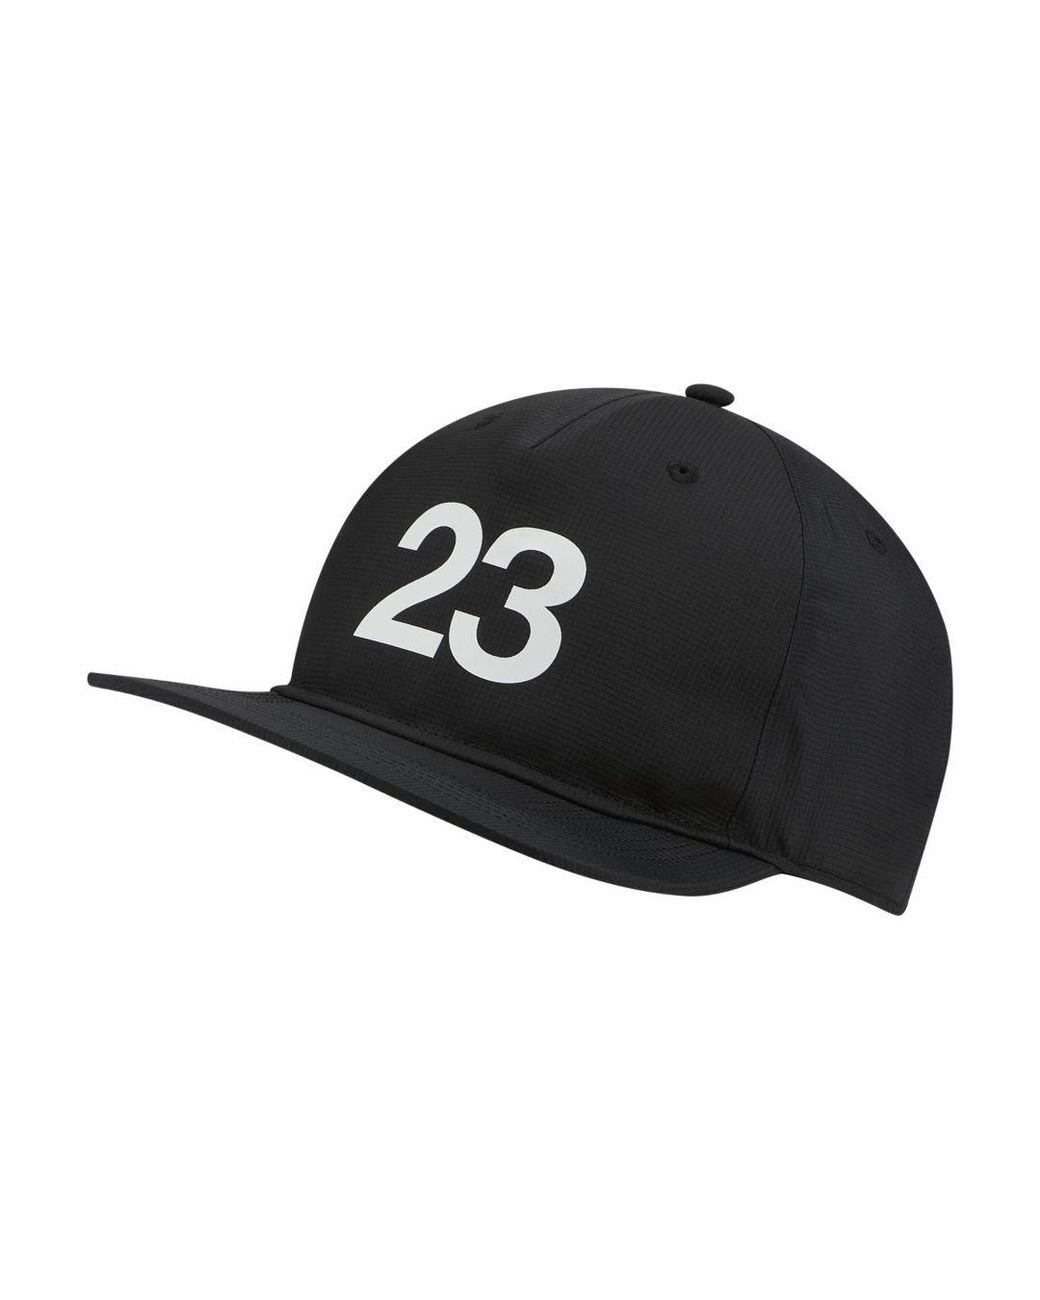 23 jordan hat